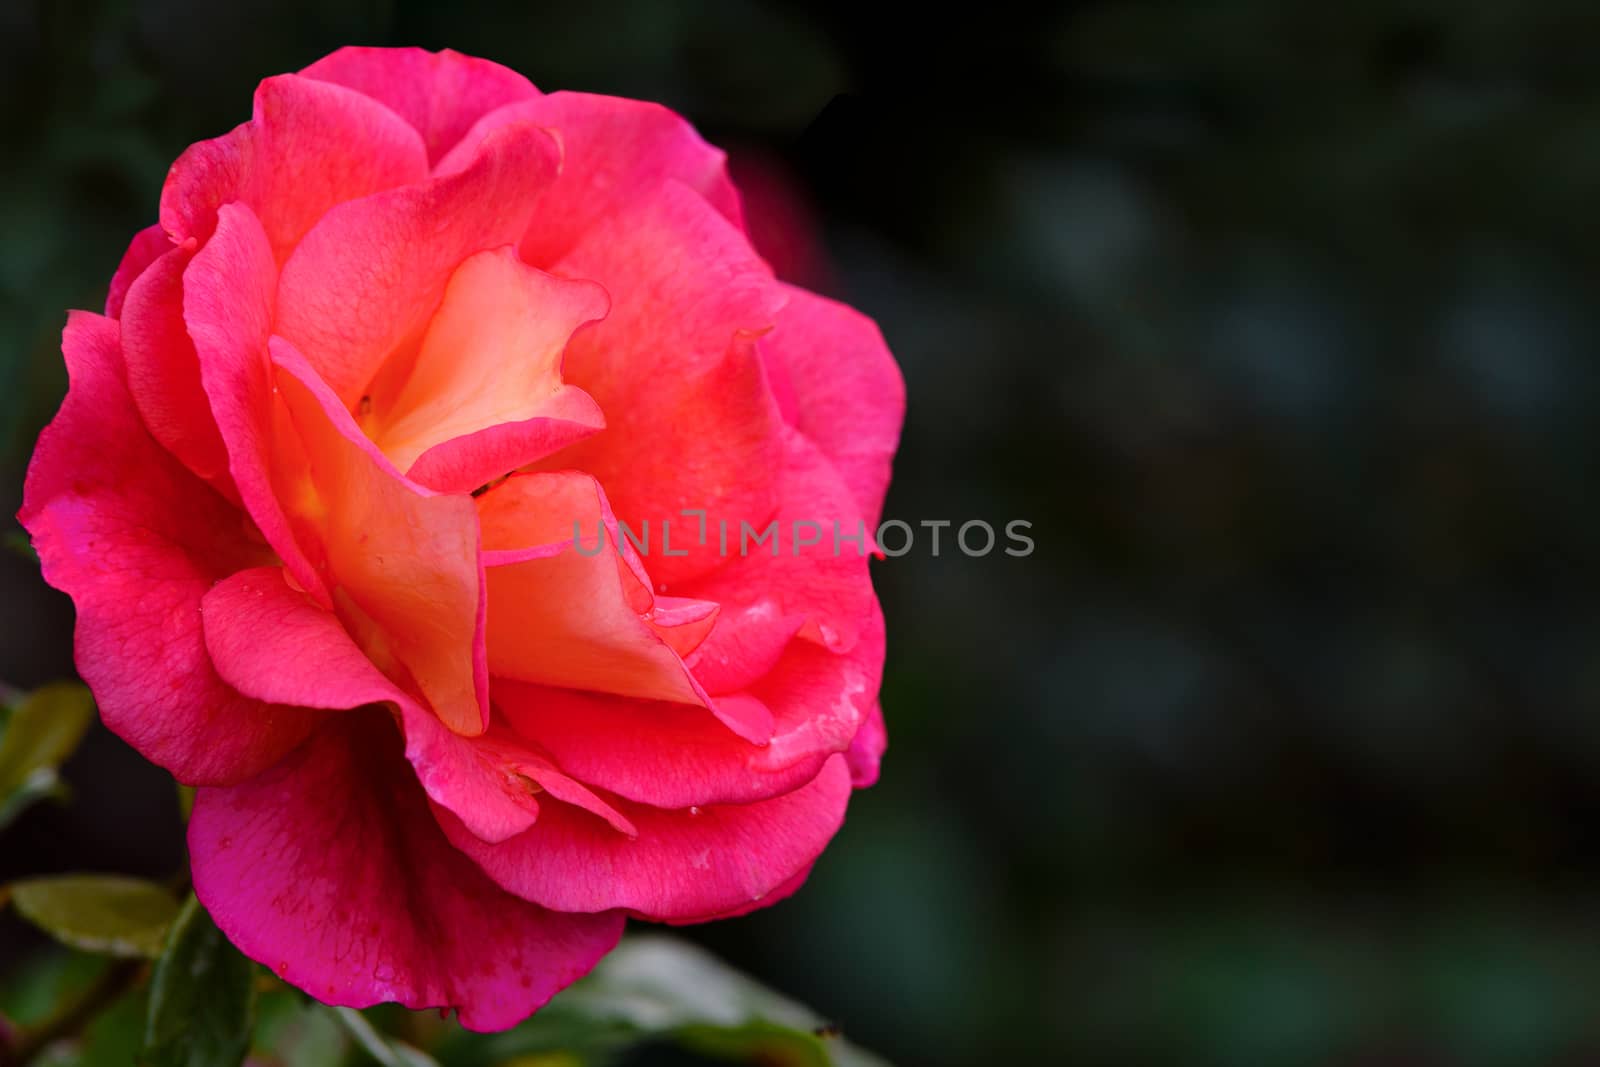 Pink blooming rose by wdnet_studio